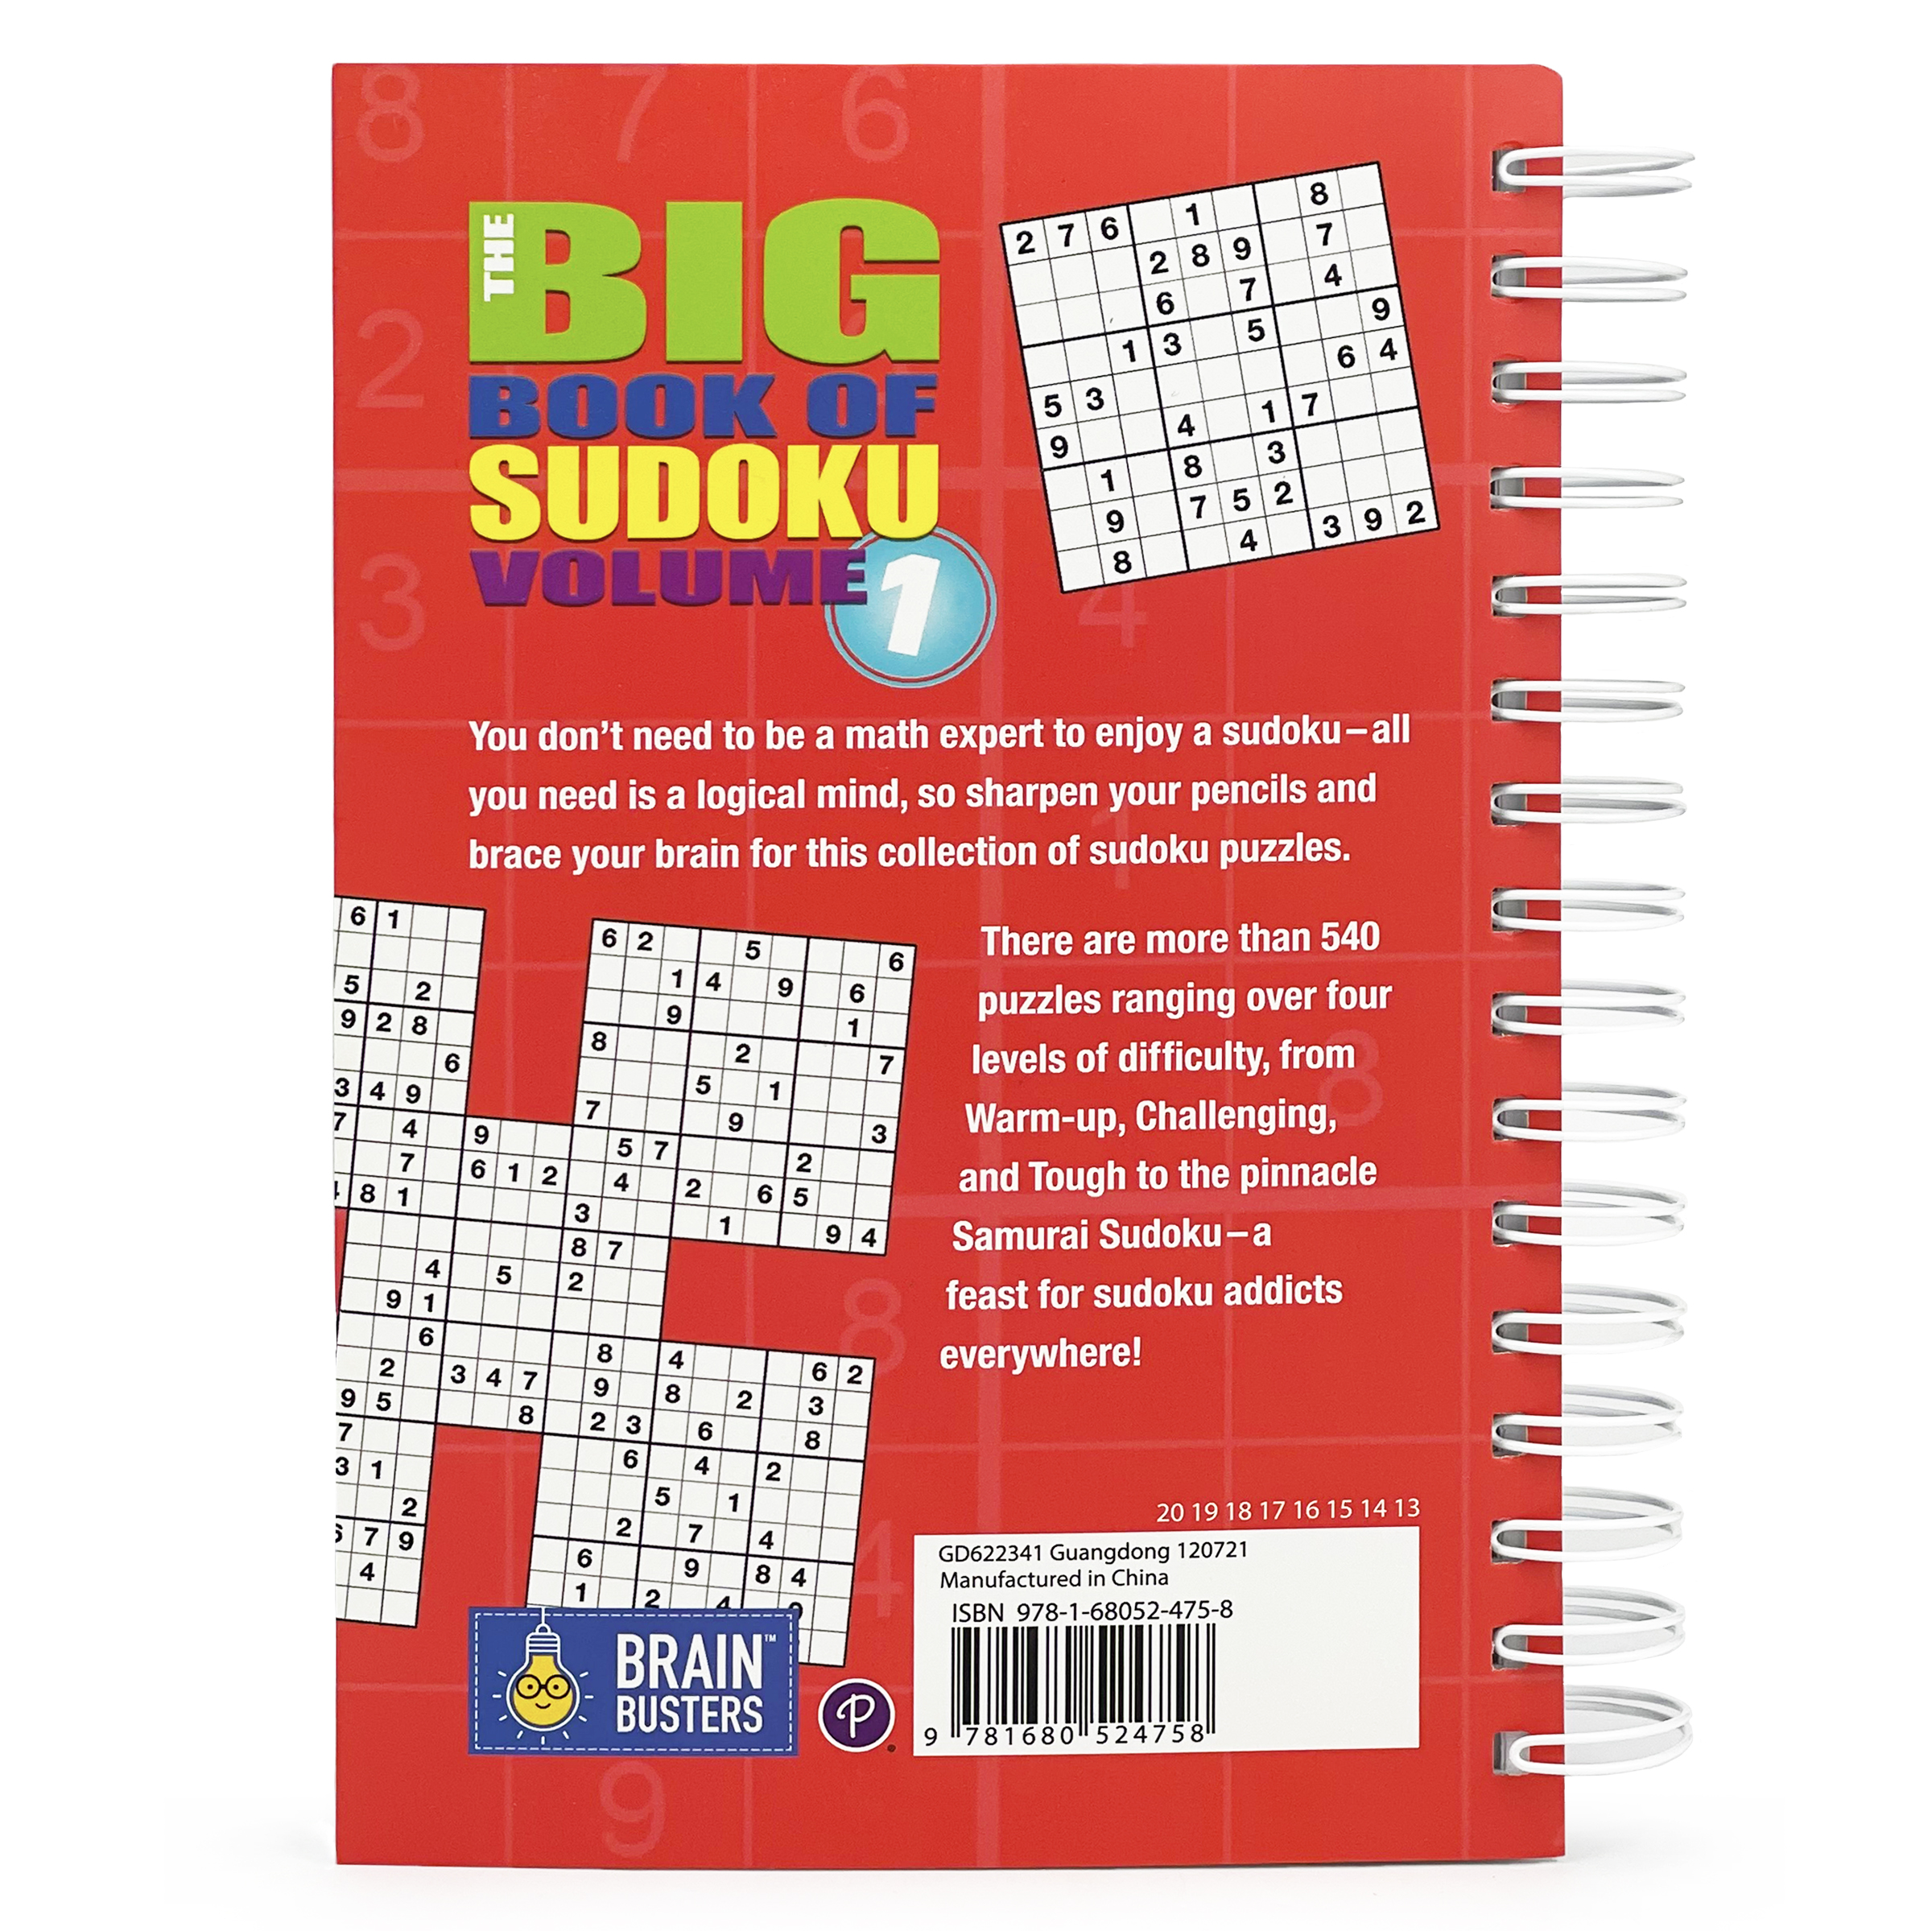 The Big Book Of Sudoku: Volume 1